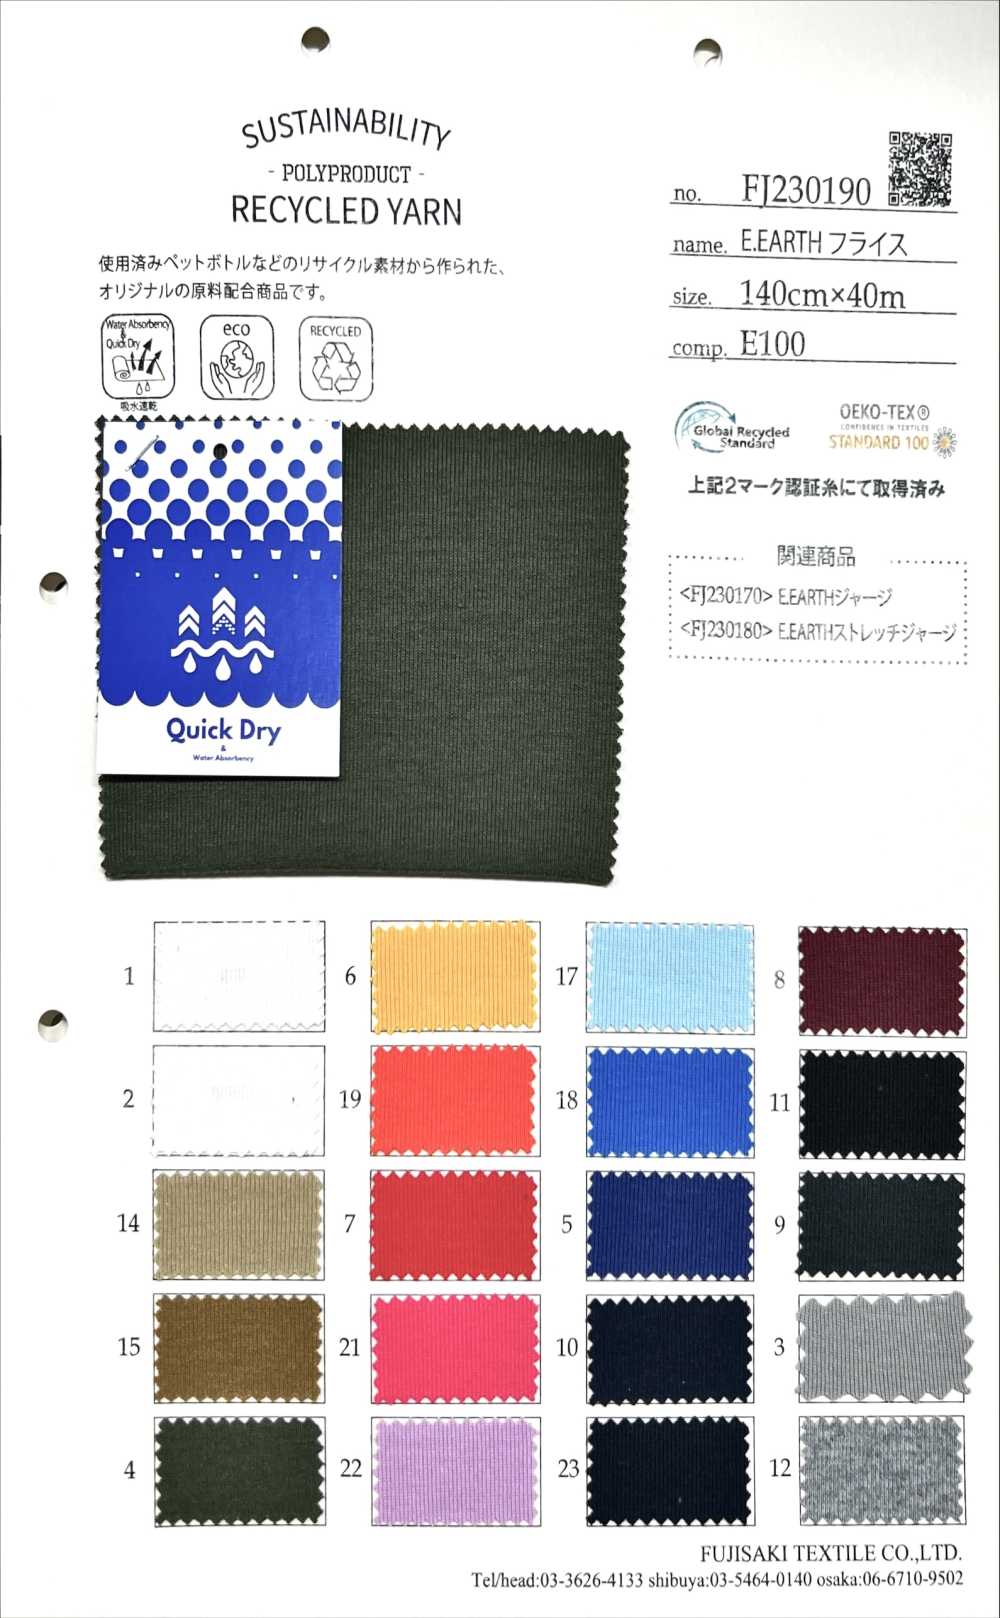 FJ230190 Nervure Circulaire E.EARTH[Fabrication De Textile] Fujisaki Textile